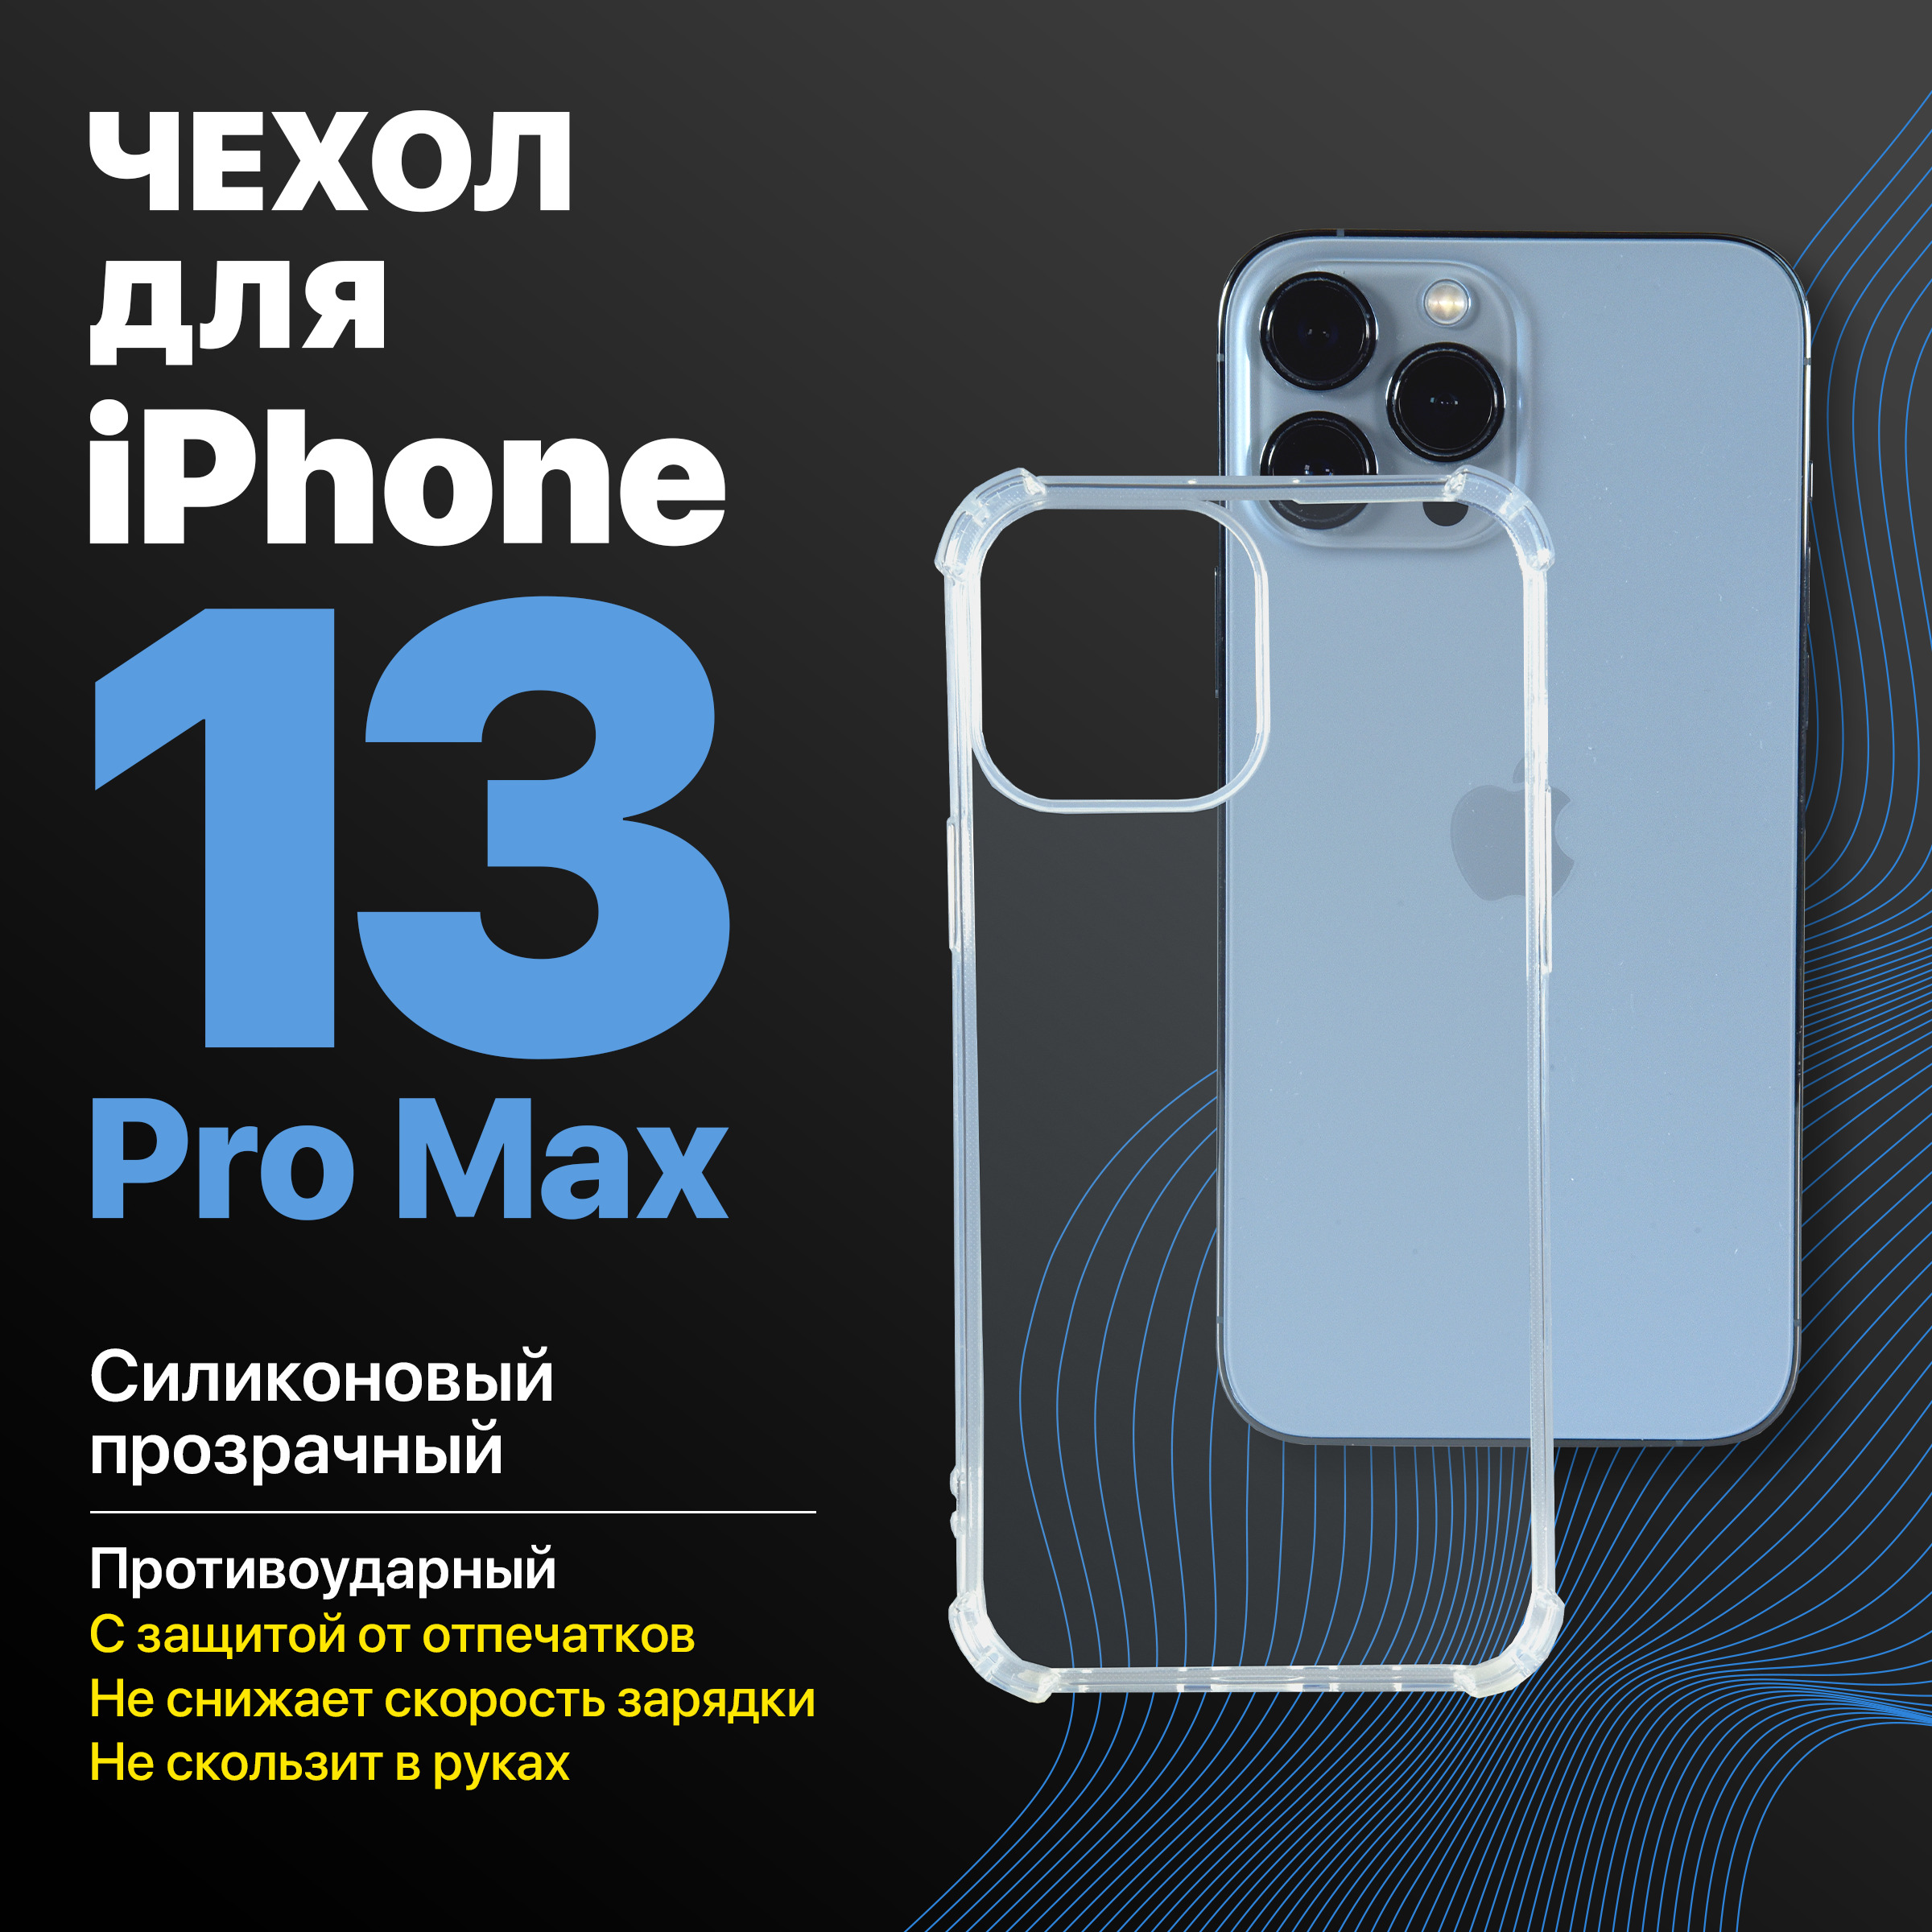 Iphone 13 pro max купить